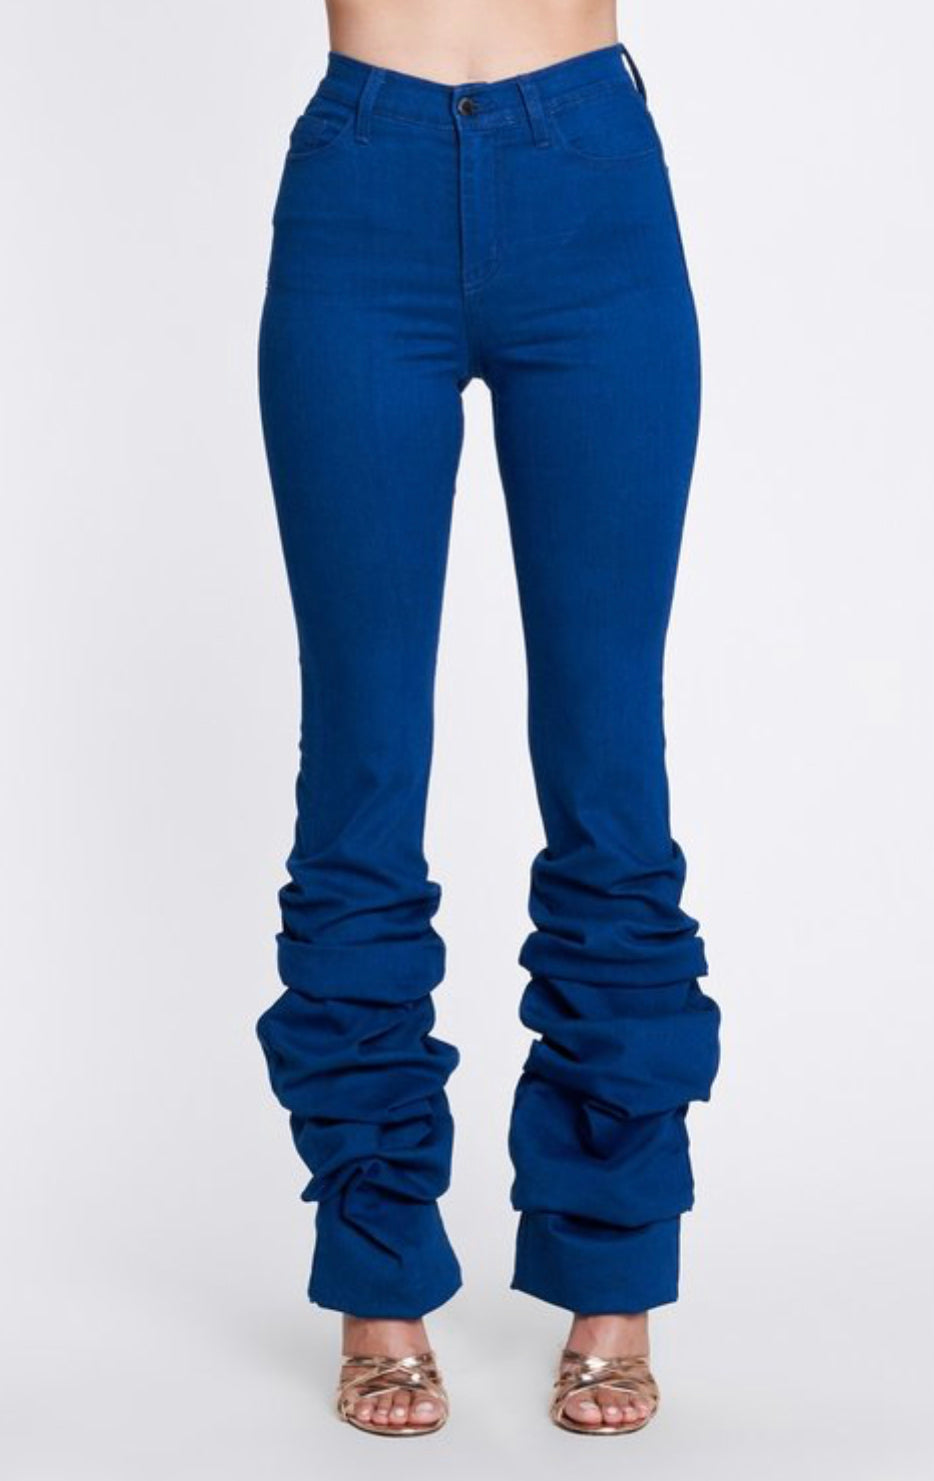 Venice Blue HIgh Waist Stacked Leg Denim Jeans - JEANS